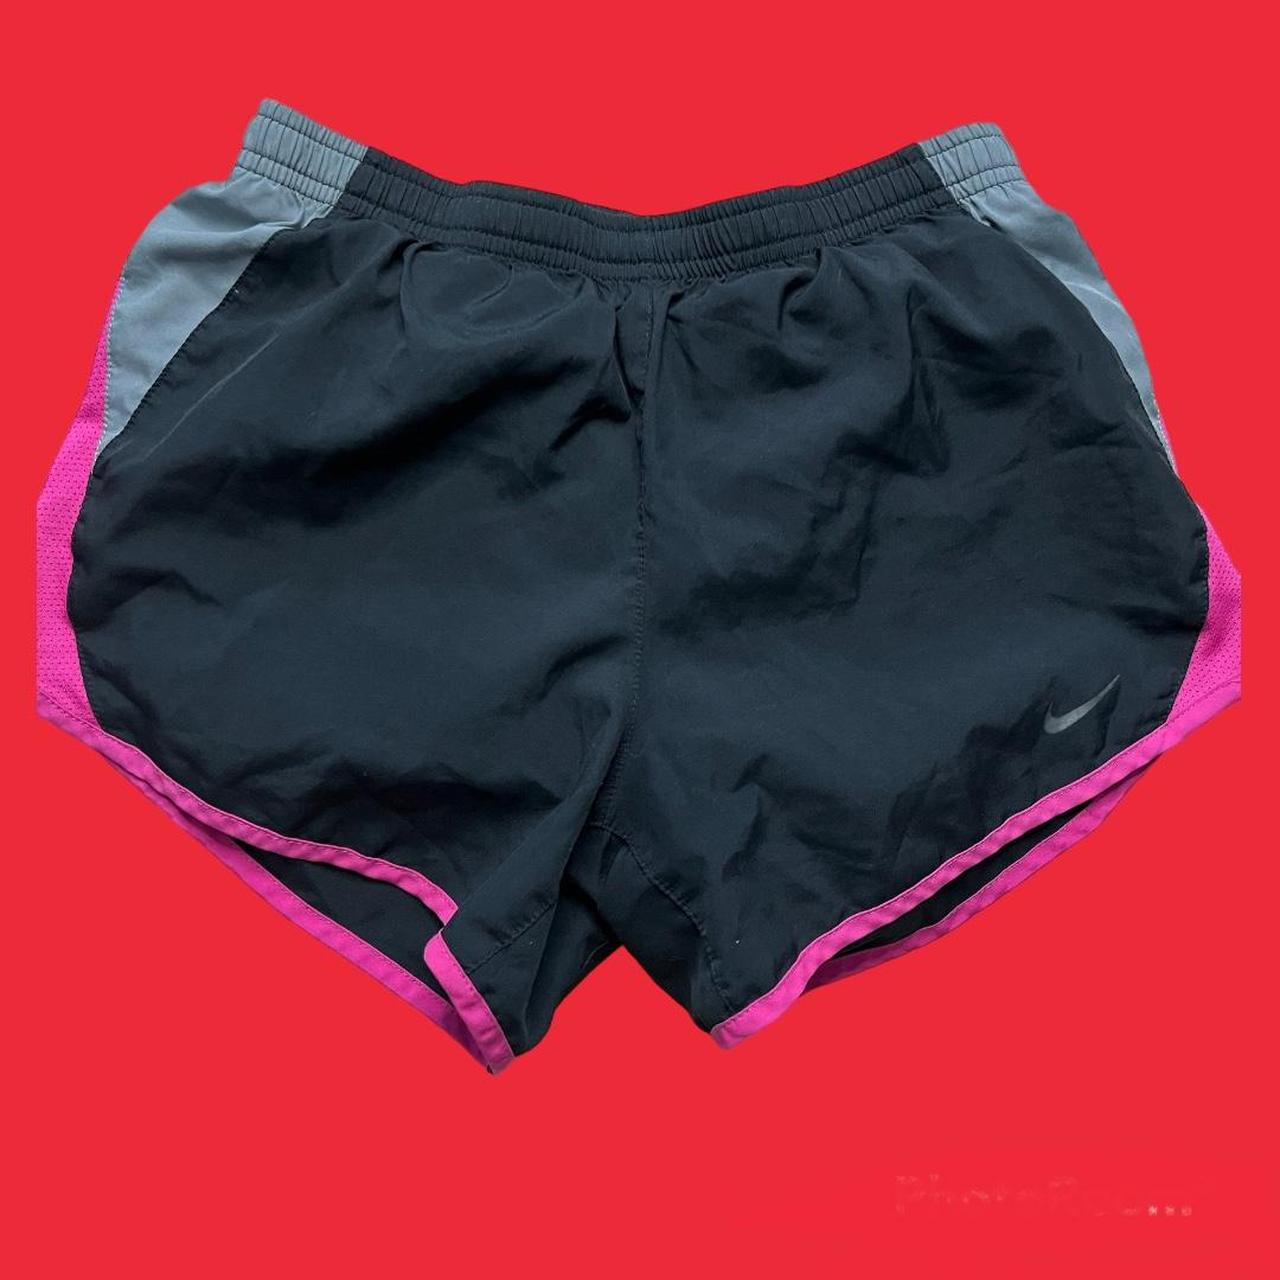 Nike Women's Grey and Pink Shorts | Depop